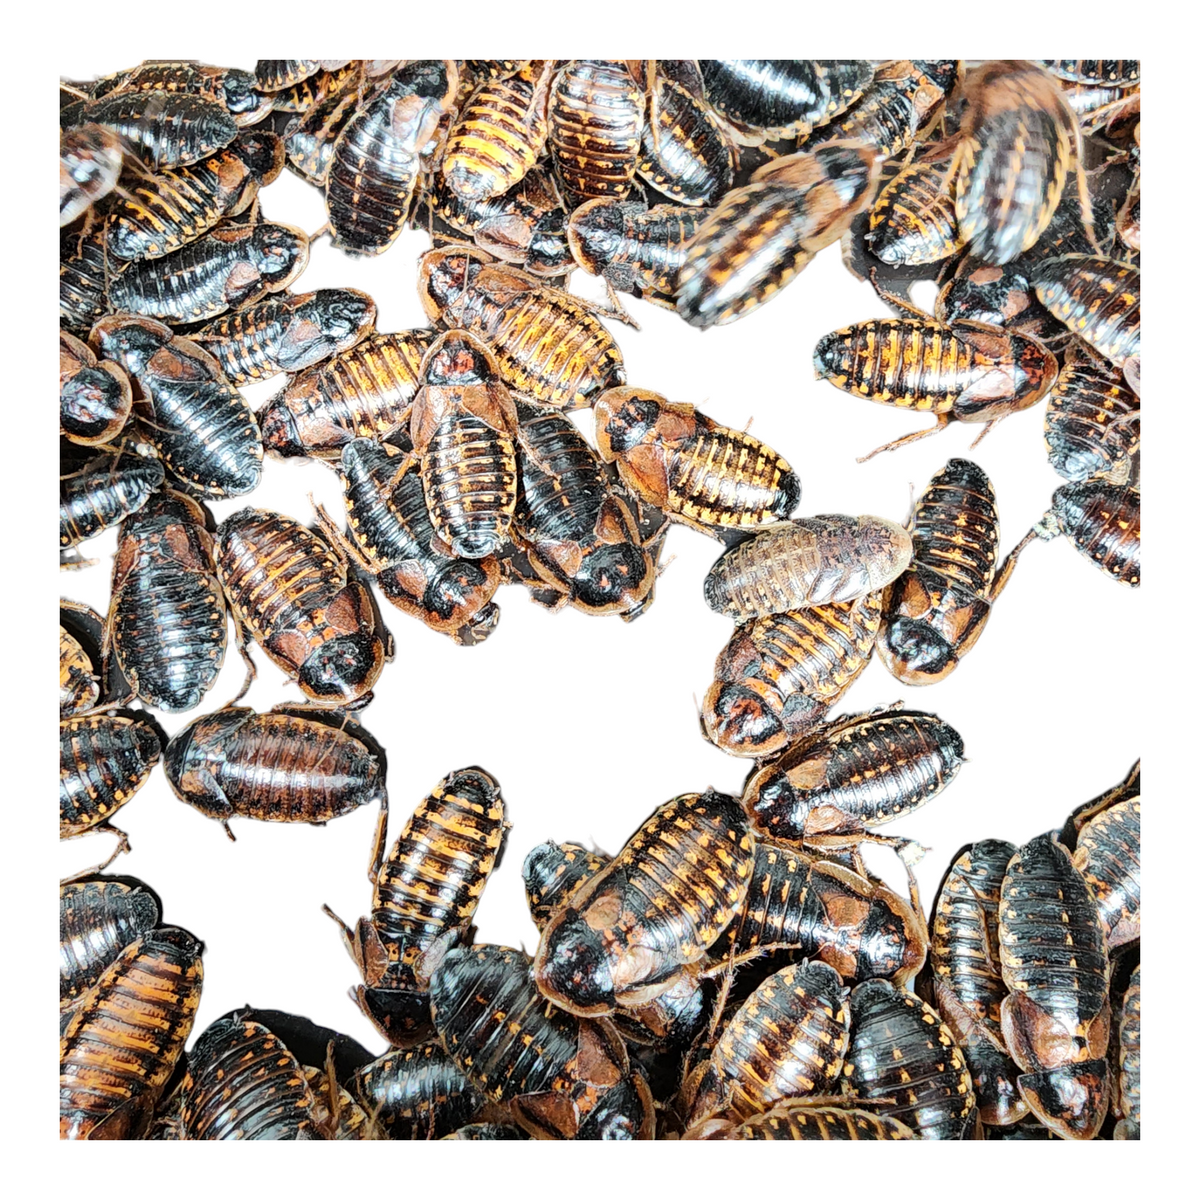 Dubia Roach - XL Adult - Bulk Roaches Reptile Food - Reptile Deli Inc.